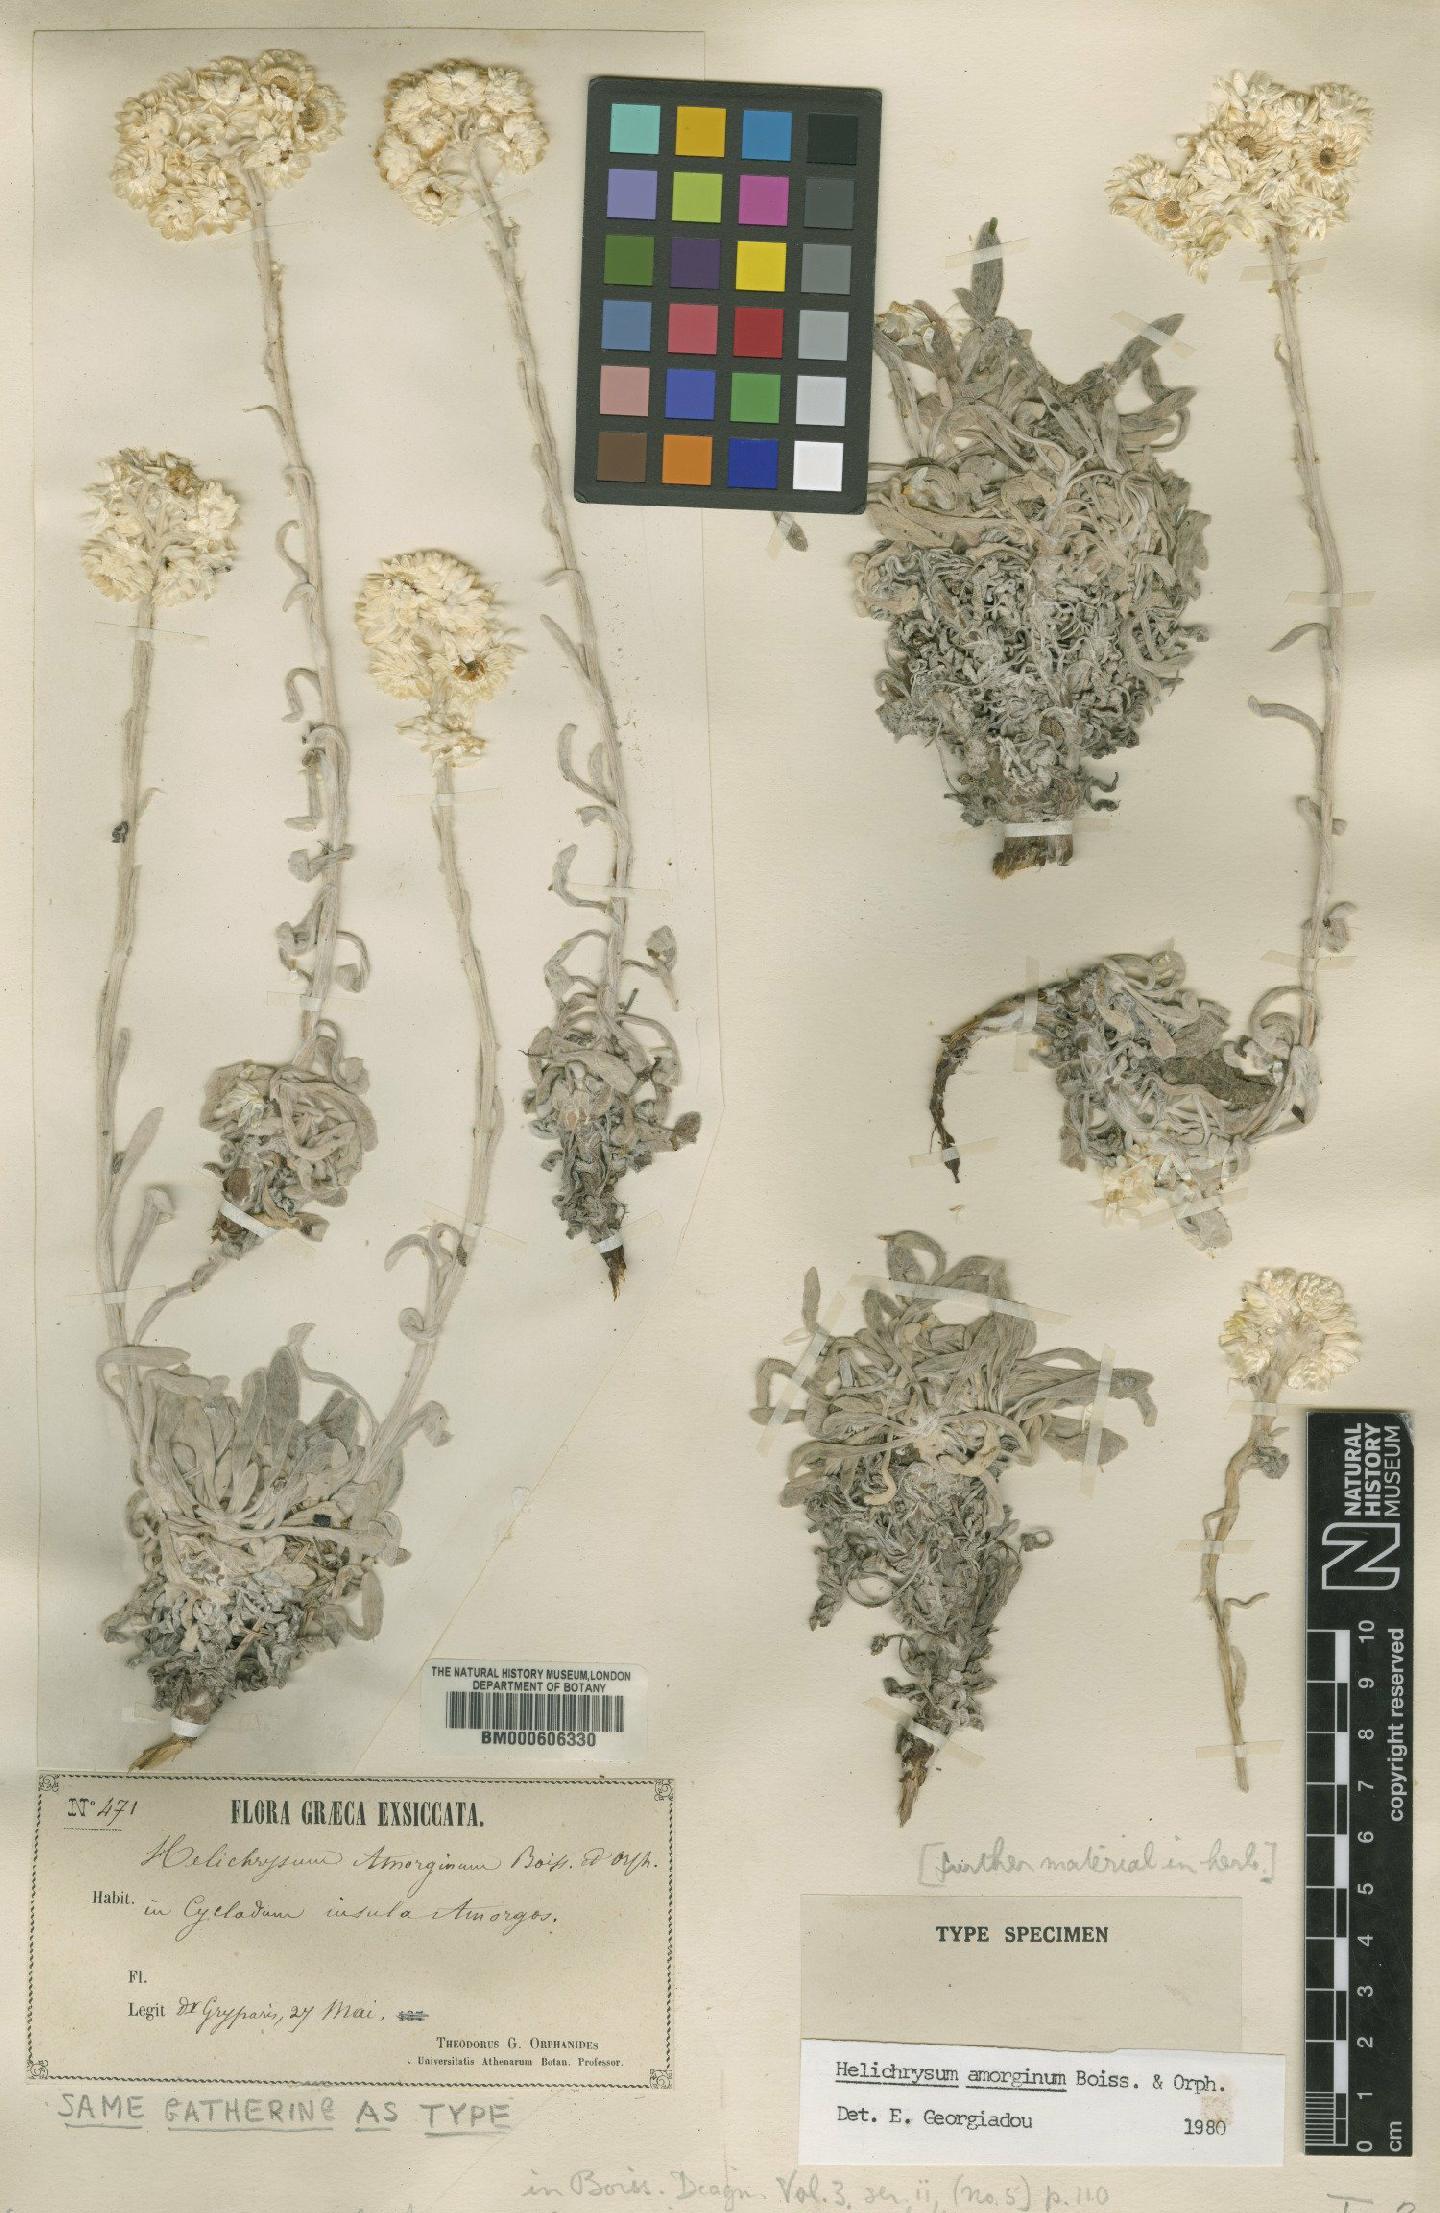 To NHMUK collection (Helichrysum amorginum Boiss. & Orph.; Type; NHMUK:ecatalogue:4682441)